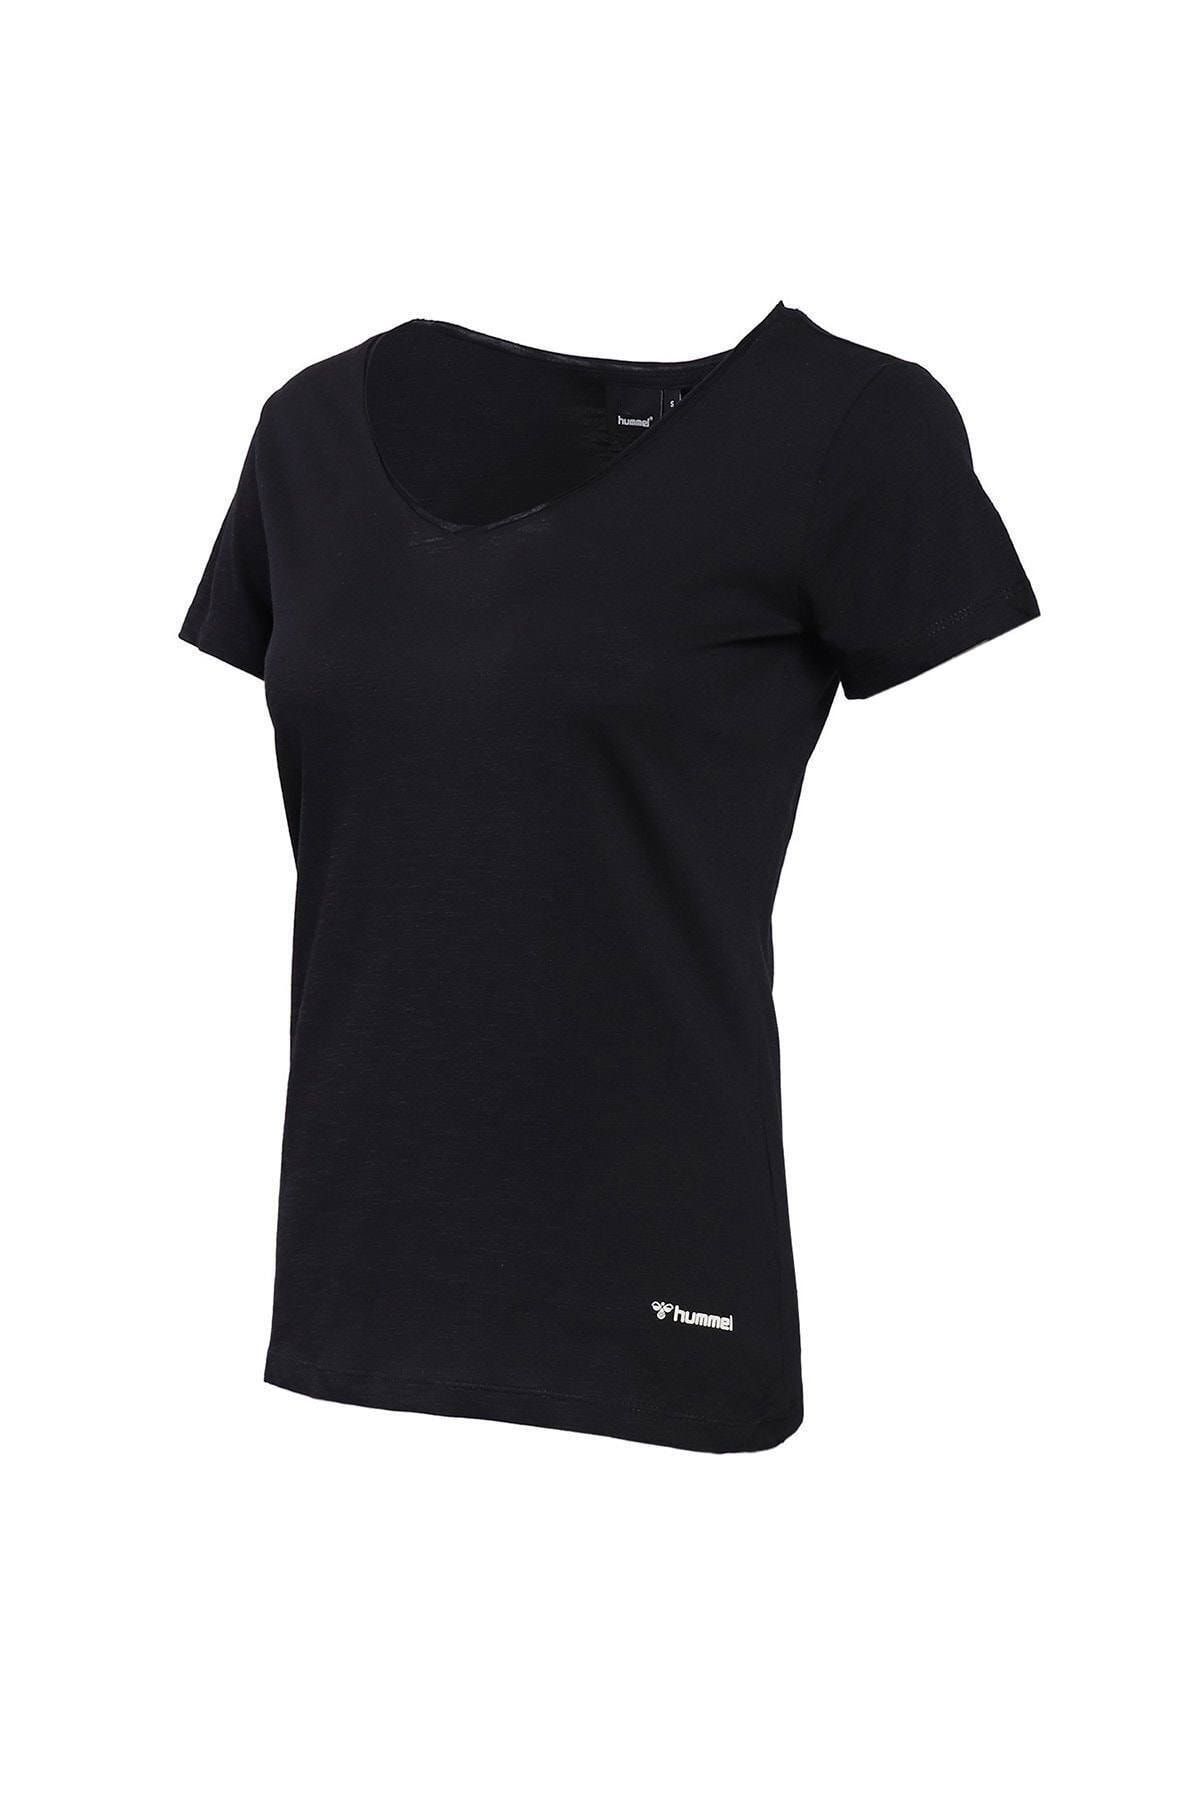 hummel HMLFLORELLA T-SHIRT Siyah Kadın T-Shirt 101086305